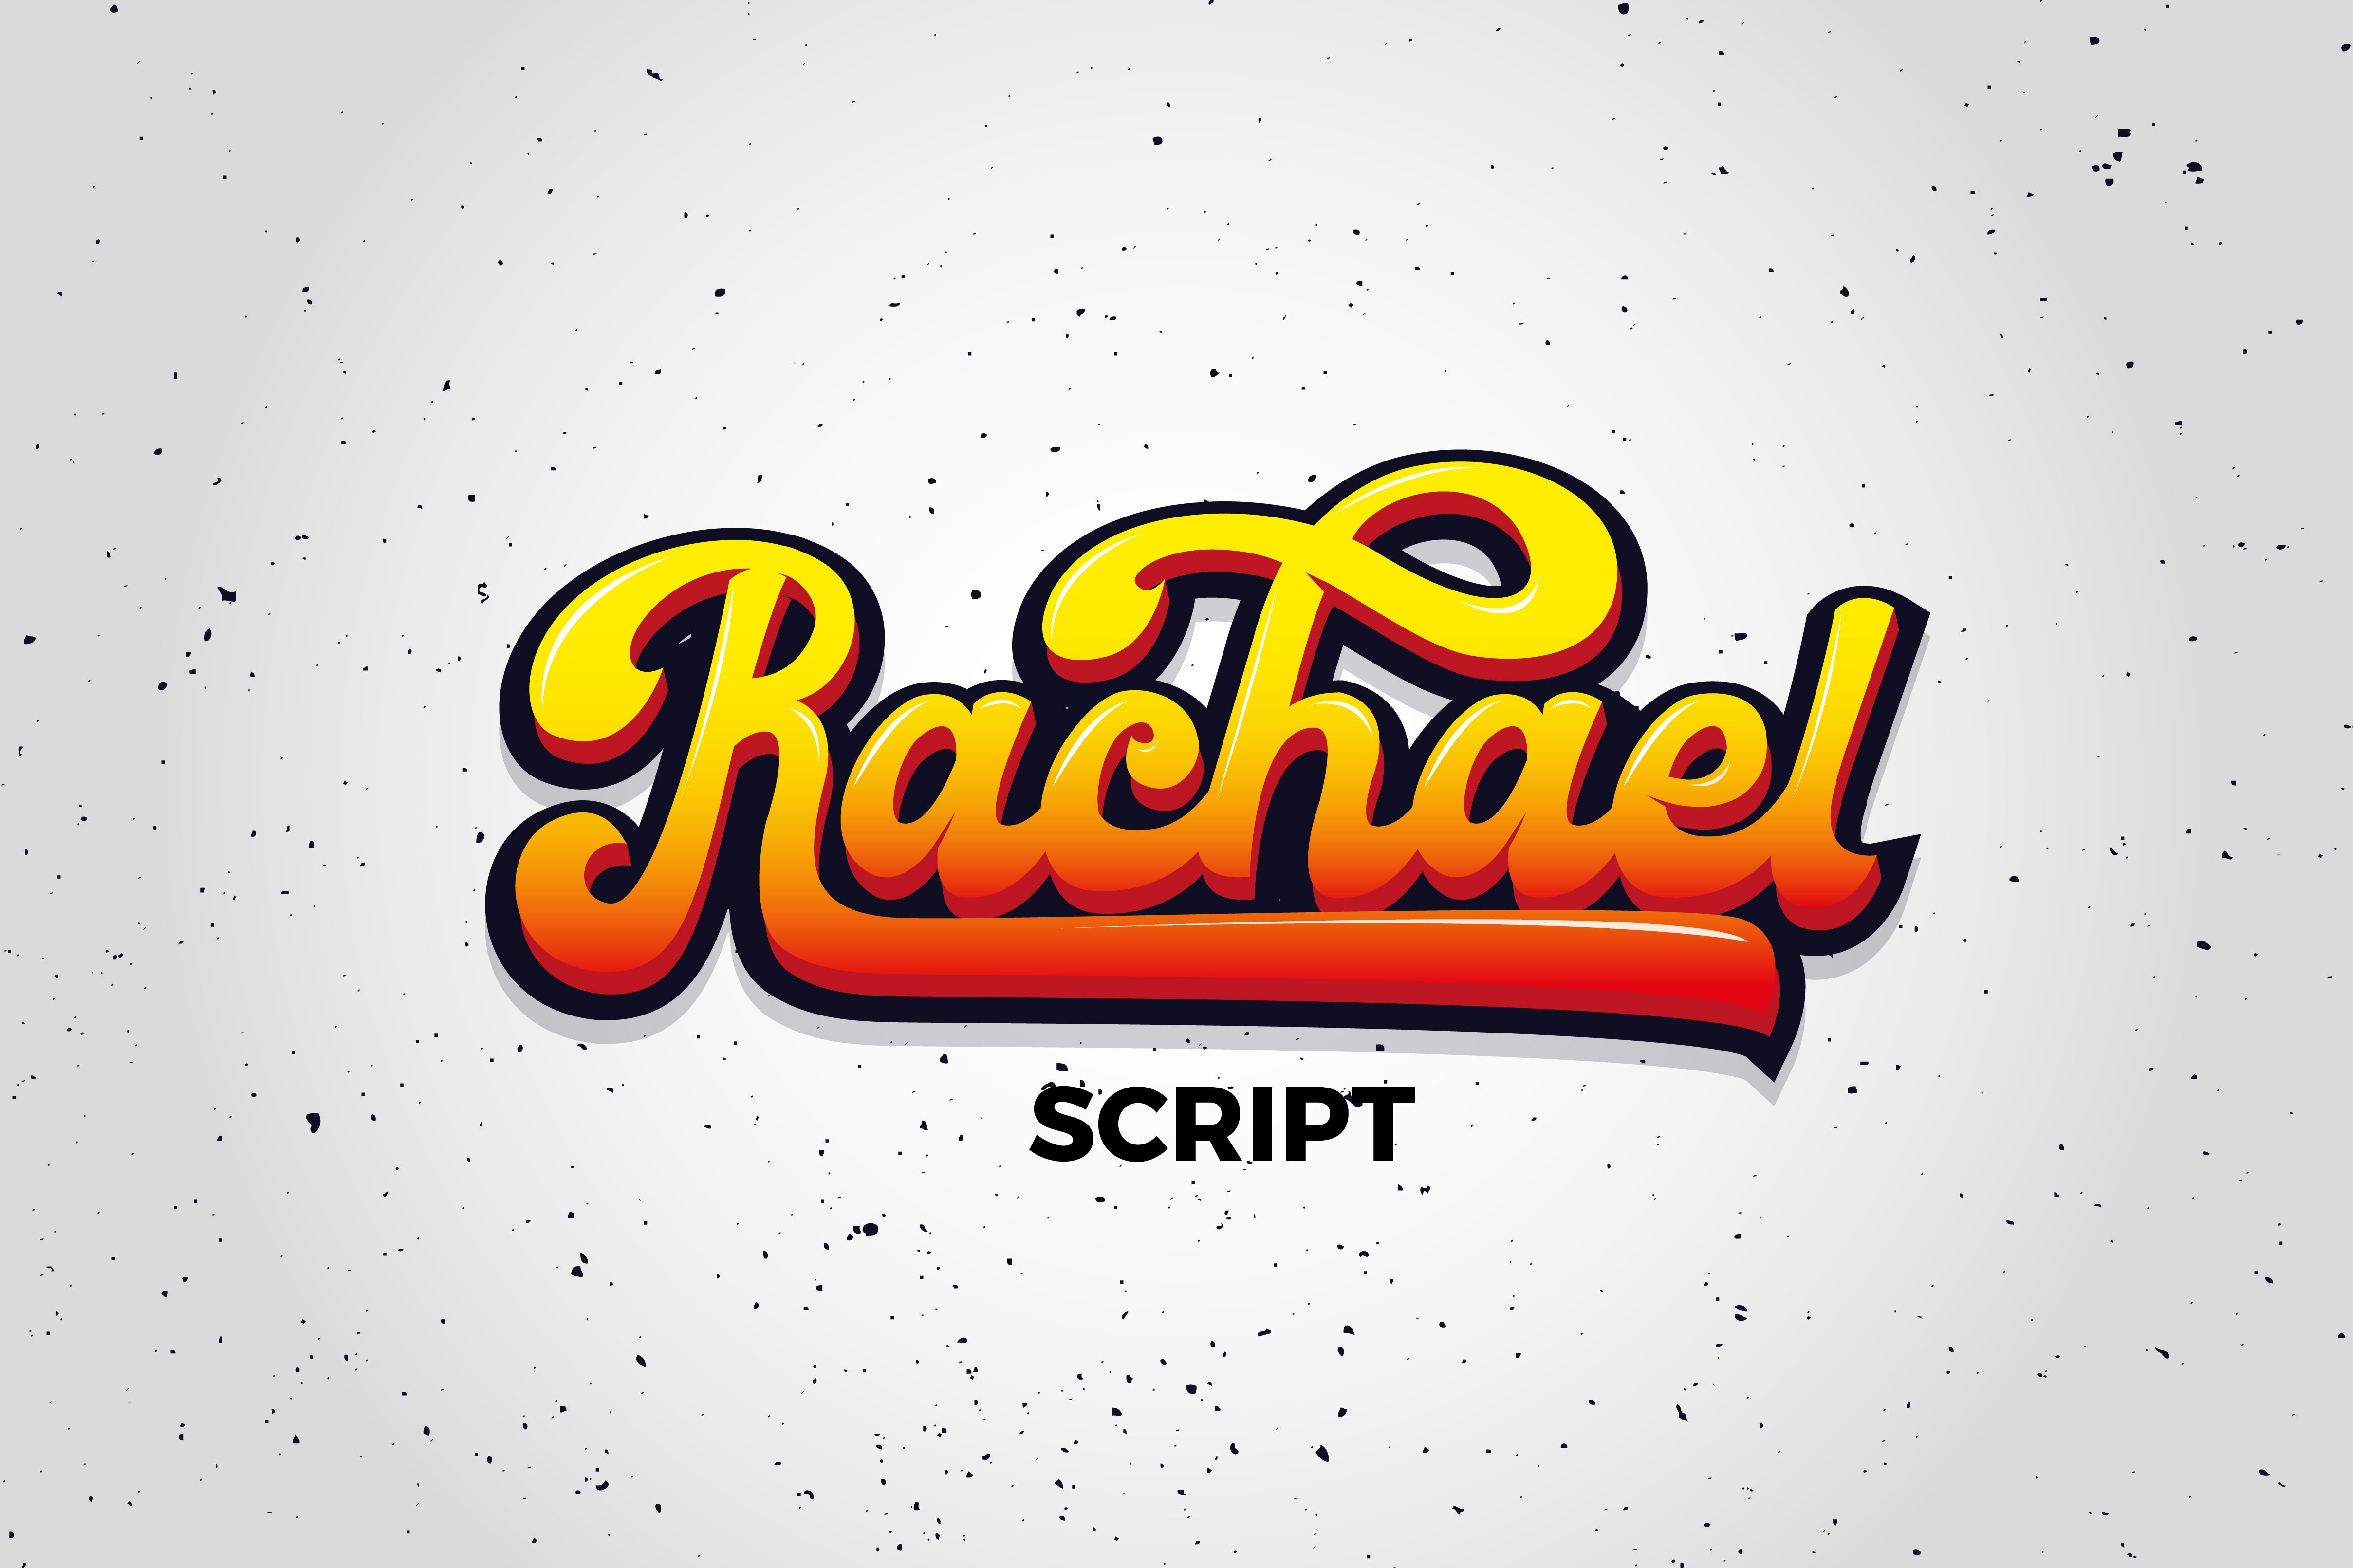 Rachael Script font